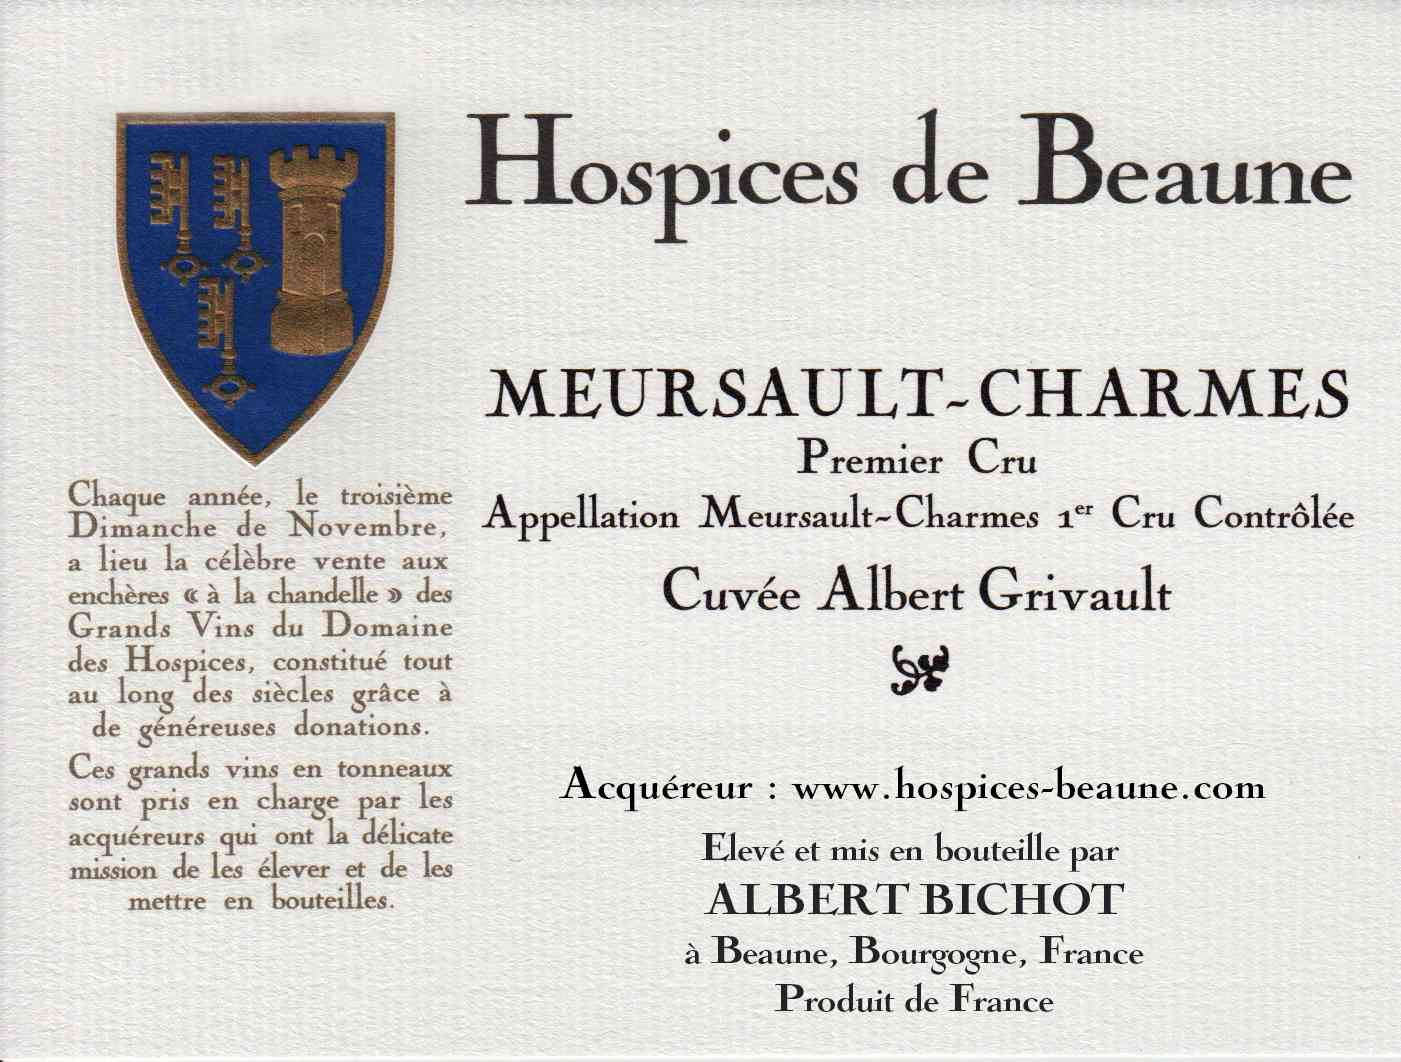 Encheres-auction-HospicesdeBeaune-AlbertBichot-Meursault-Charmes-PremierCru-Cuvee-AlbertGrivault